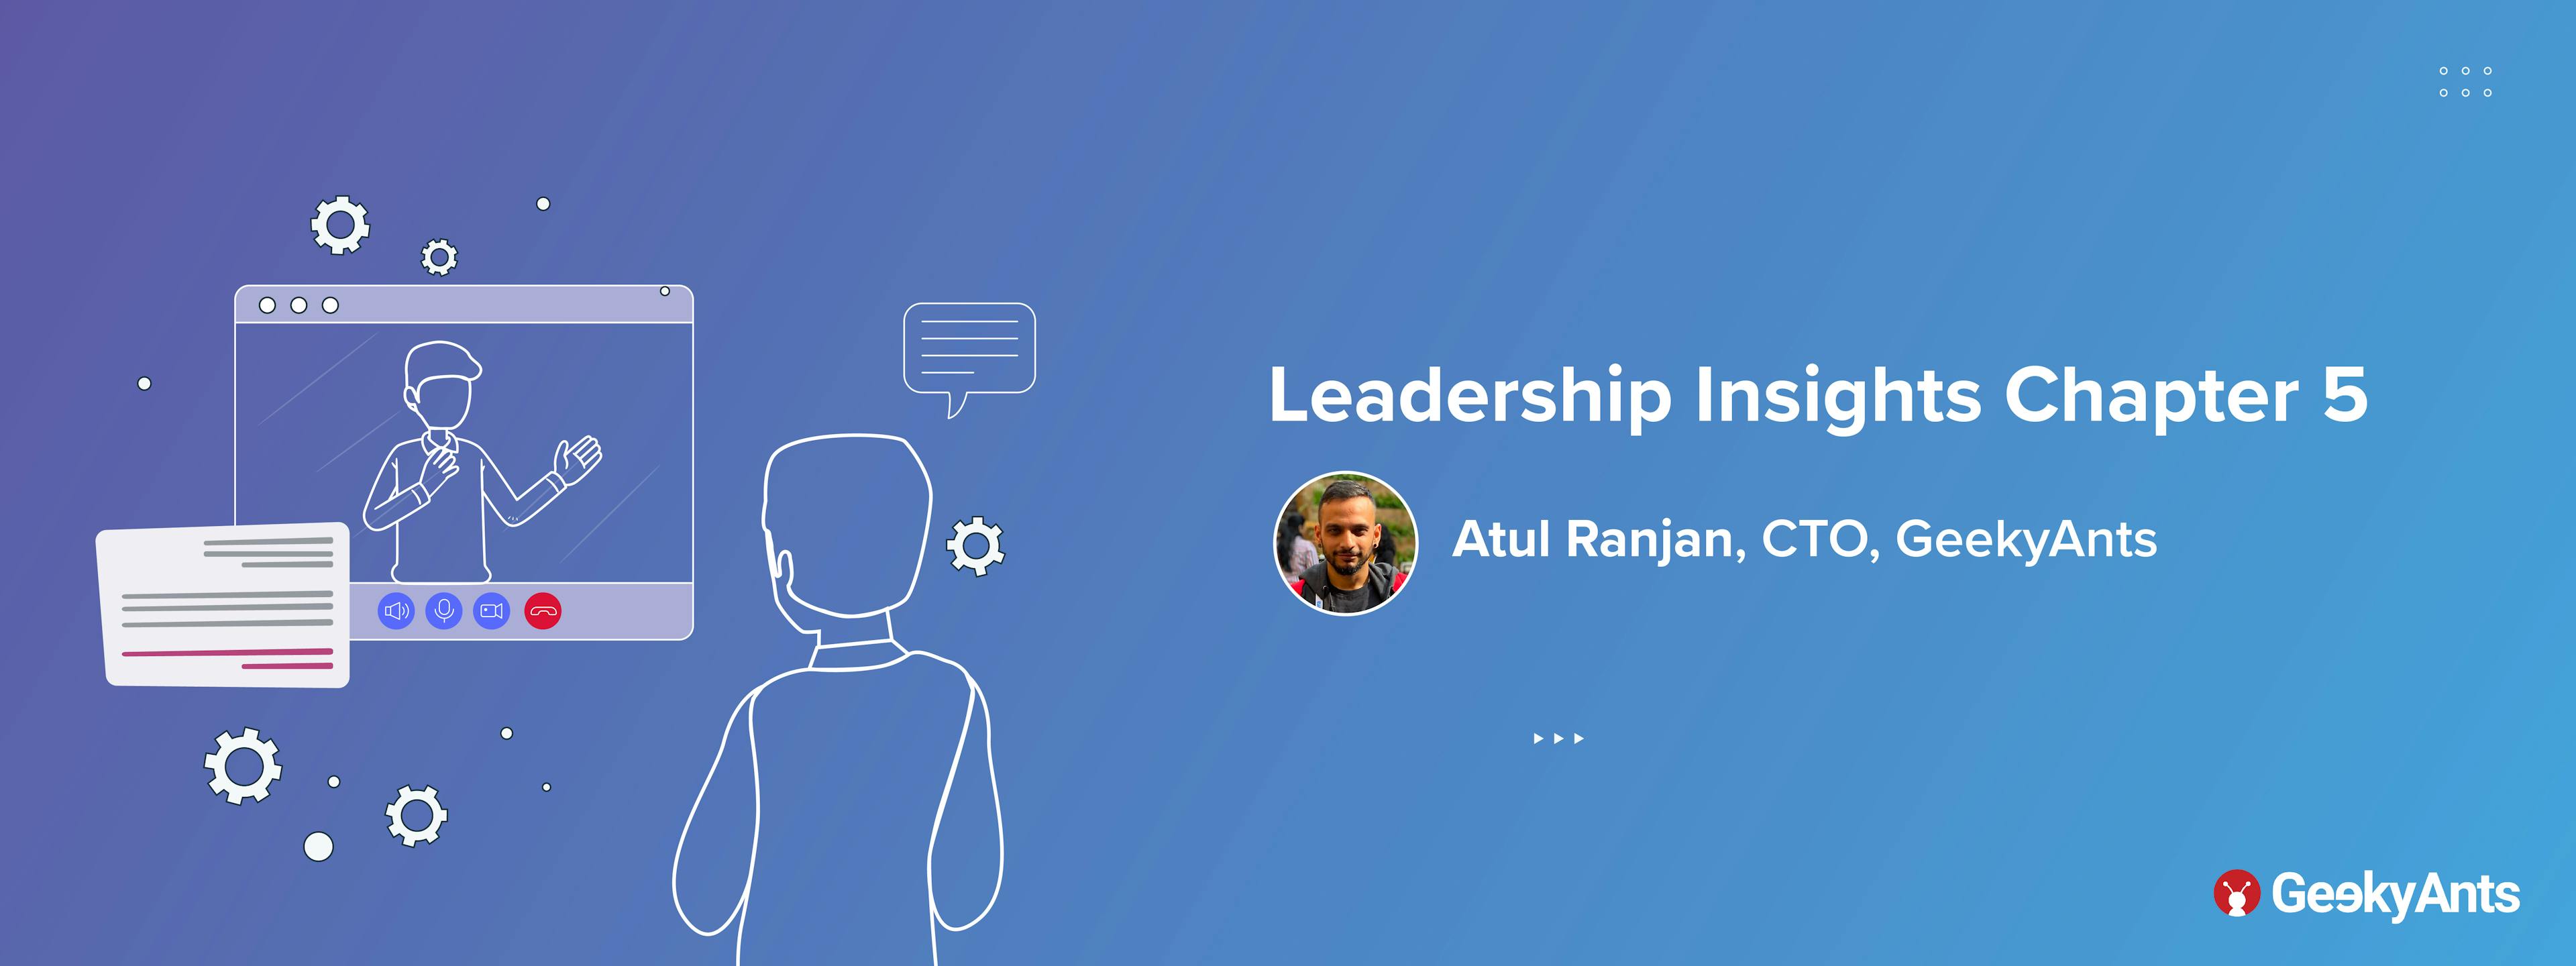 Leadership Insights Chapter 5: Atul Ranjan, CTO, GeekyAnts